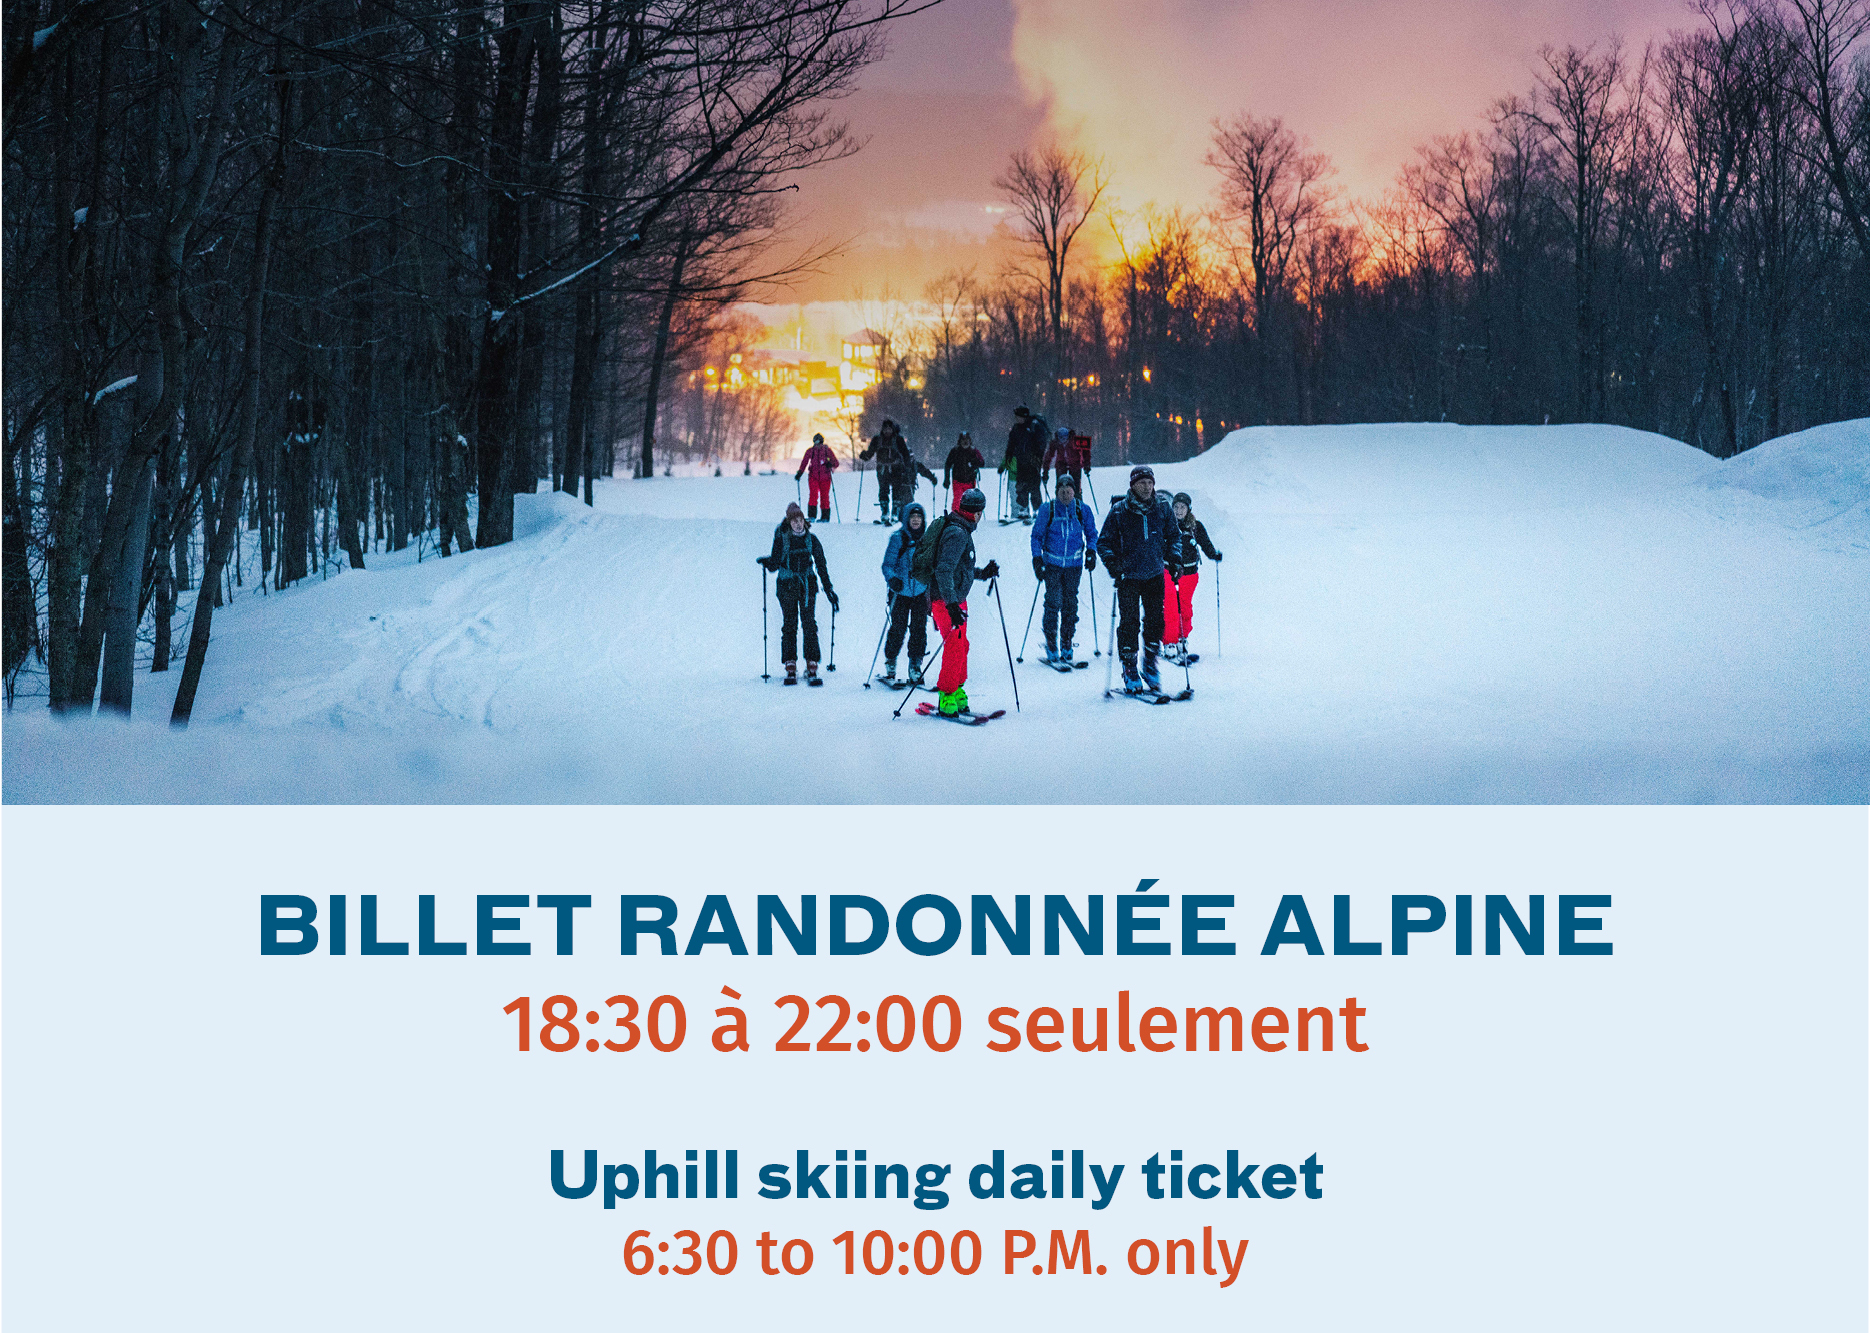 Ticket uphill skiing 6:30-10:00 p.m.